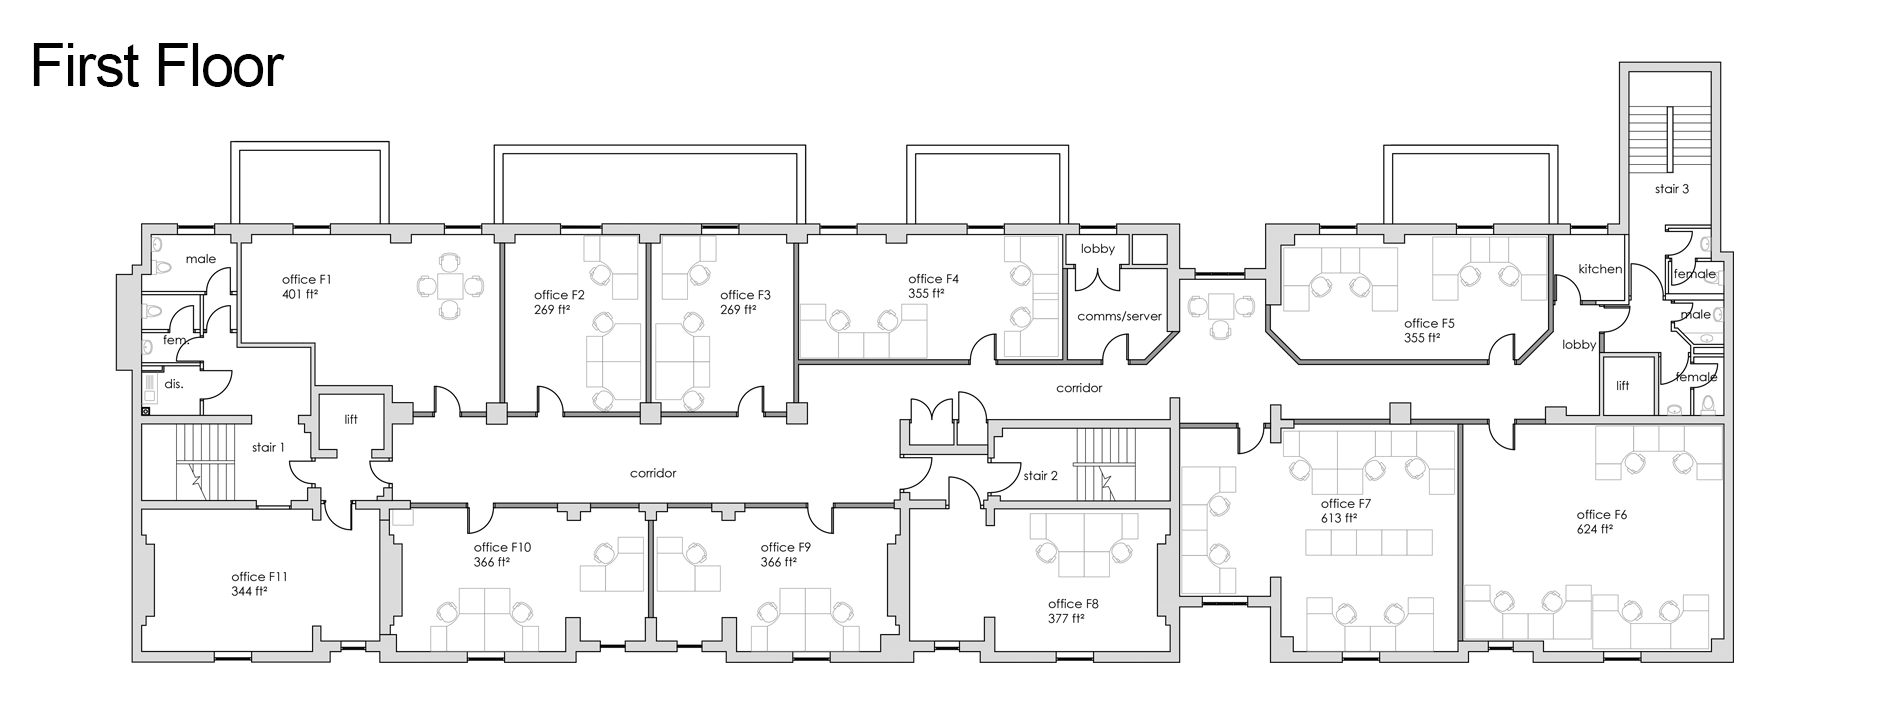 First Floor Office Plan